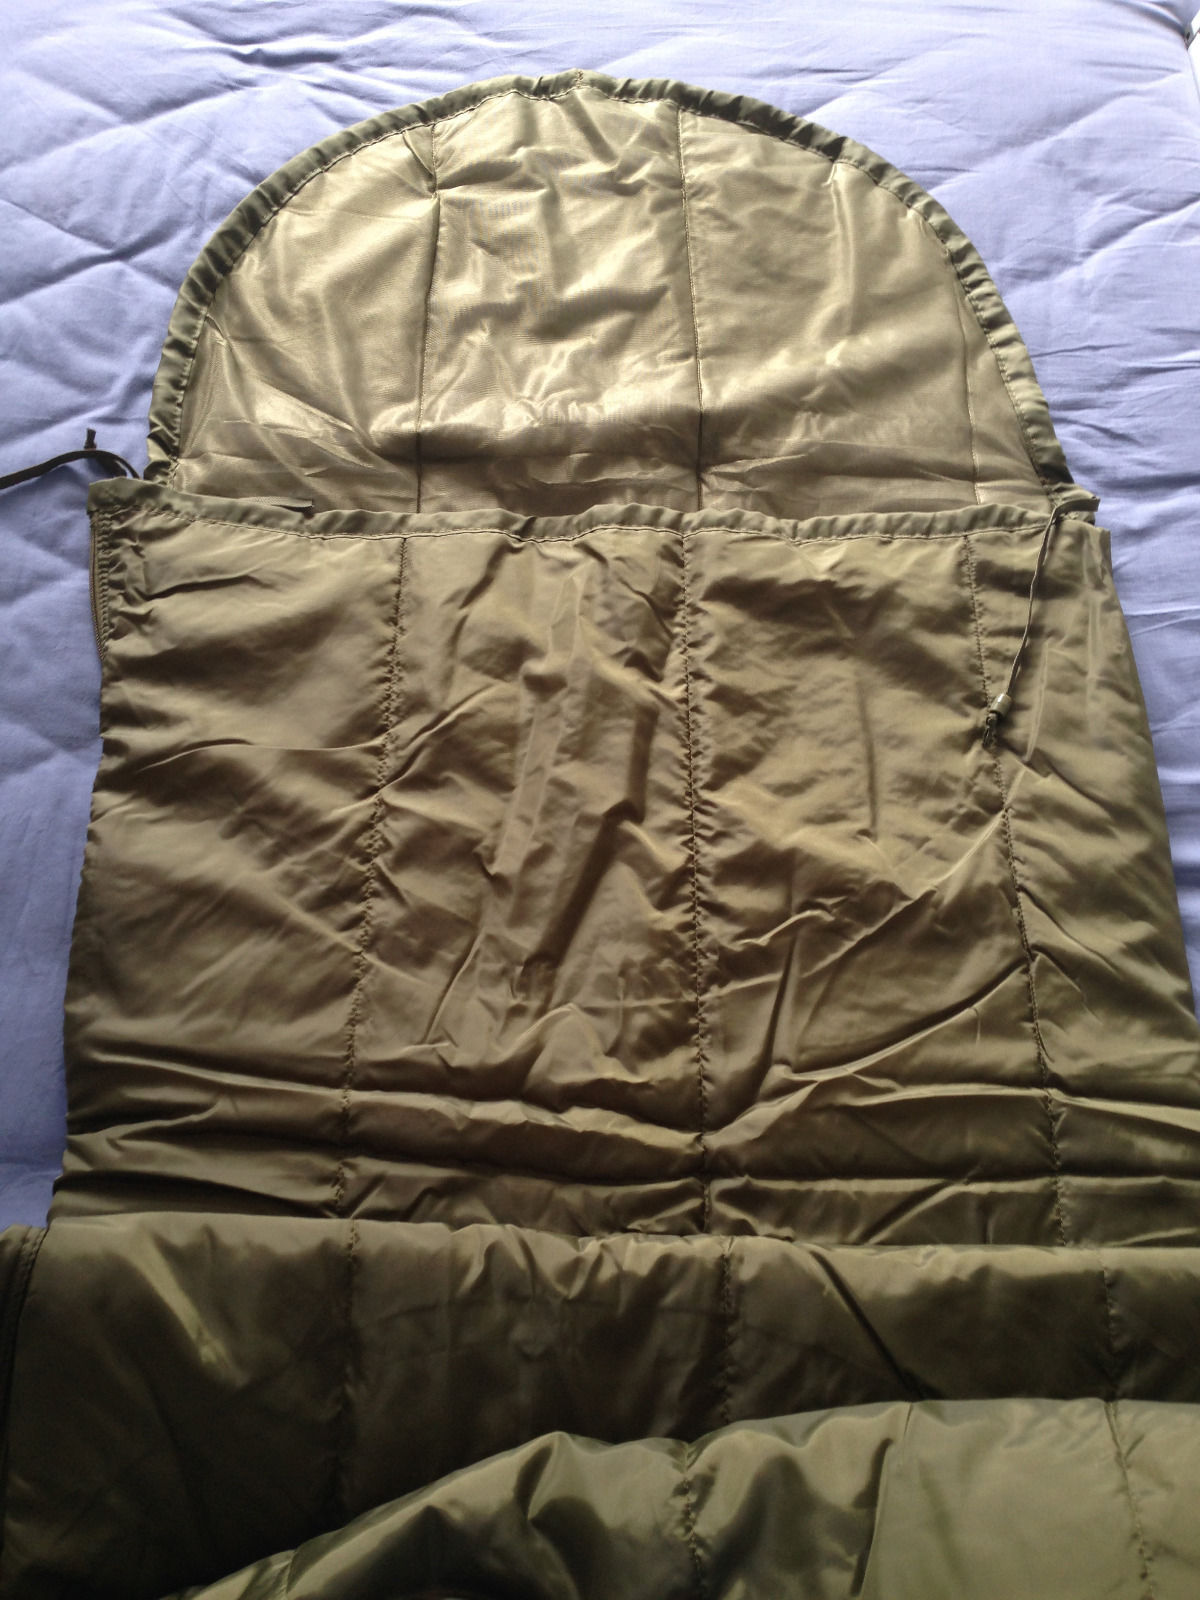 Webbingbabel: British Army Warm Weather Sleeping Bag Kit